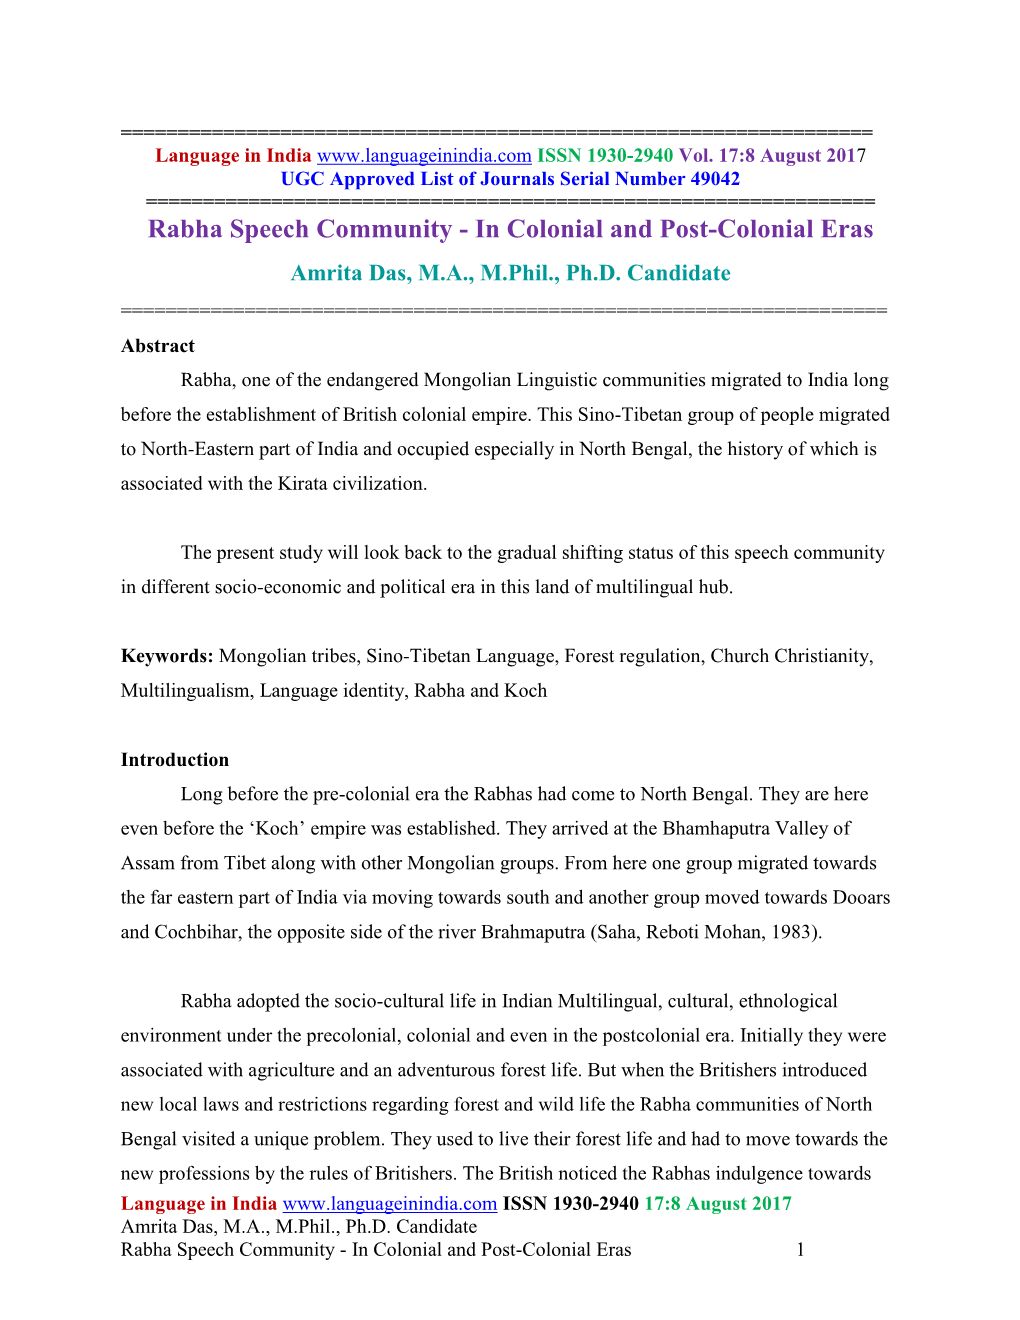 Rabha Speech Community - in Colonial and Post-Colonial Eras Amrita Das, M.A., M.Phil., Ph.D